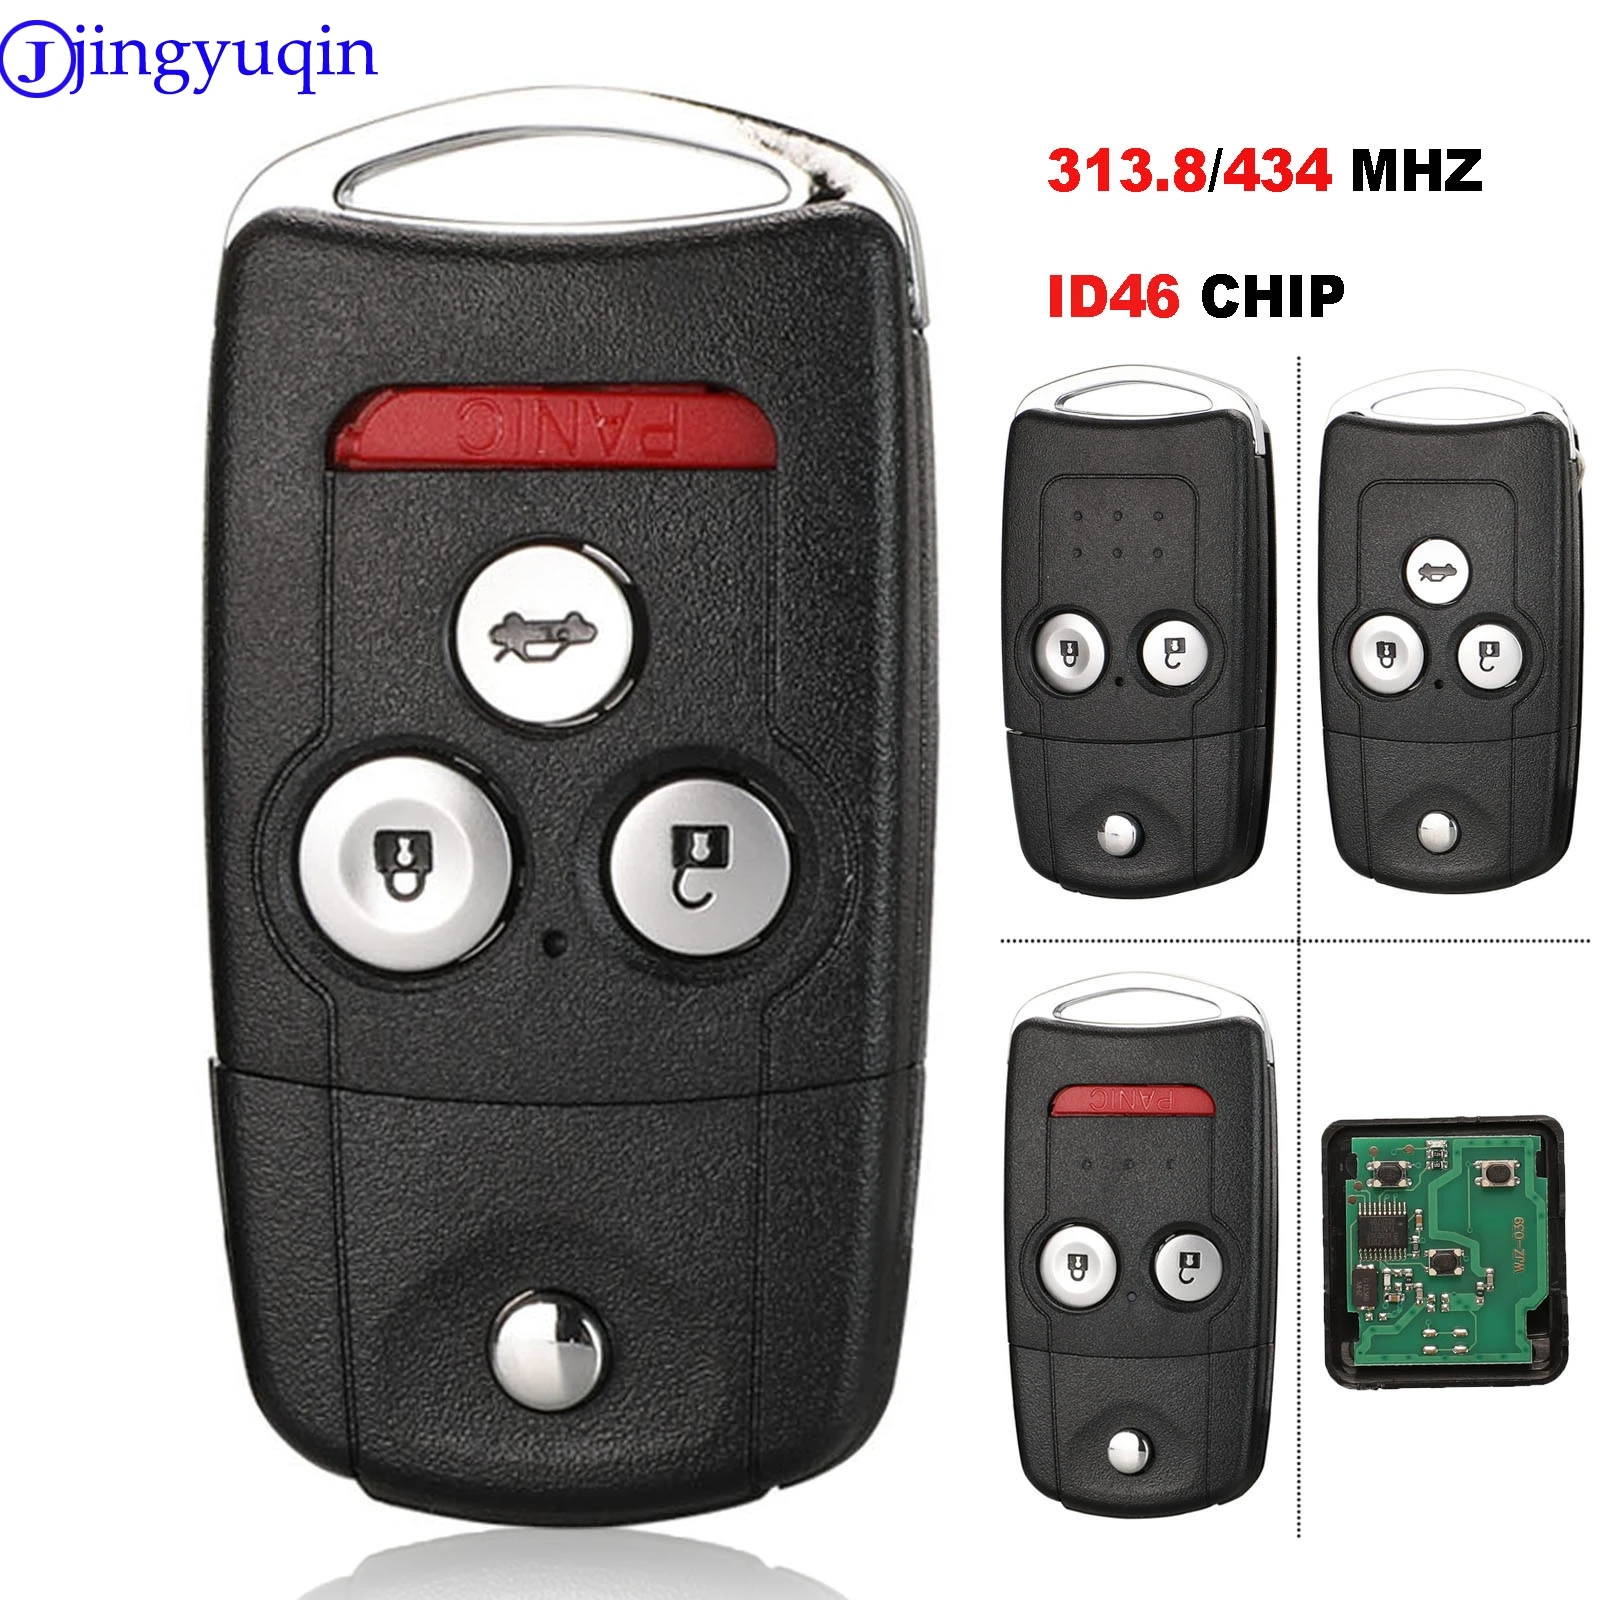 jingyuqin 433mhz id46 3b Car Remote Flip Key Fob Case Shell Upgrade For Honda Civic Accord Jazz CRV